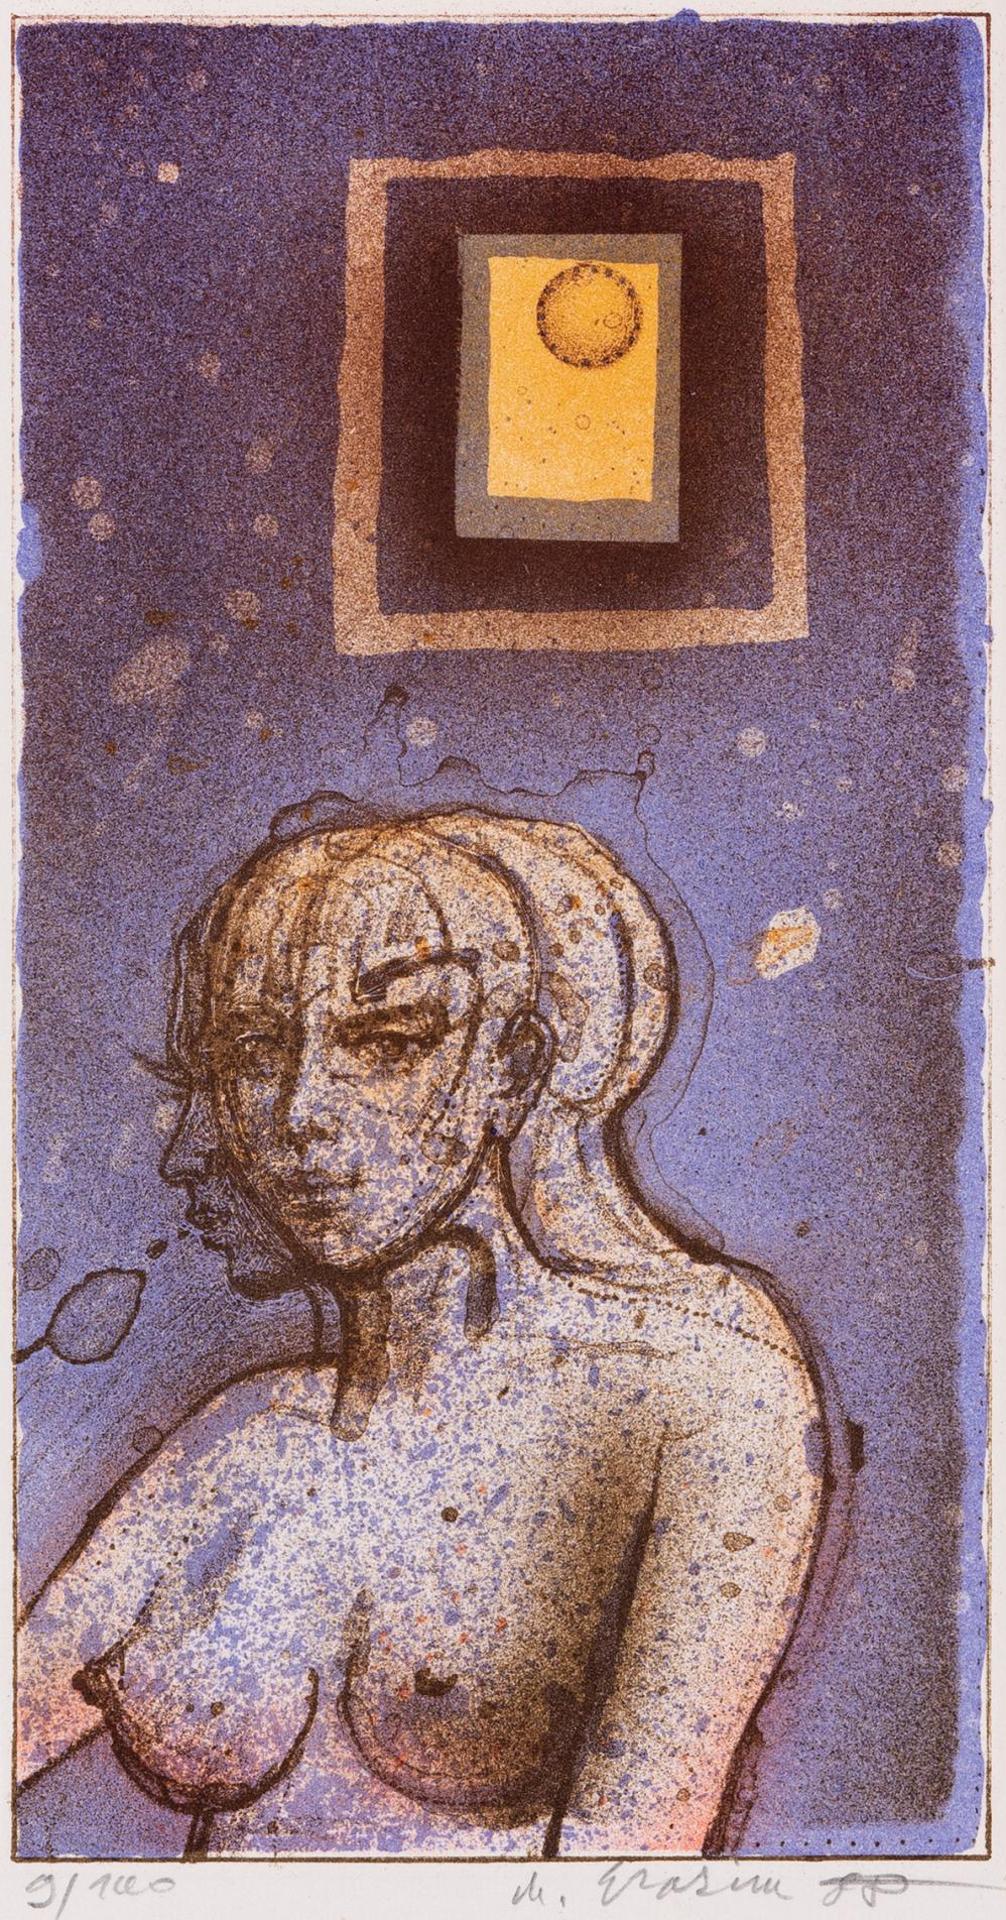 Milan Erazim (1946-2020) - Untitled - Nude with Artwork